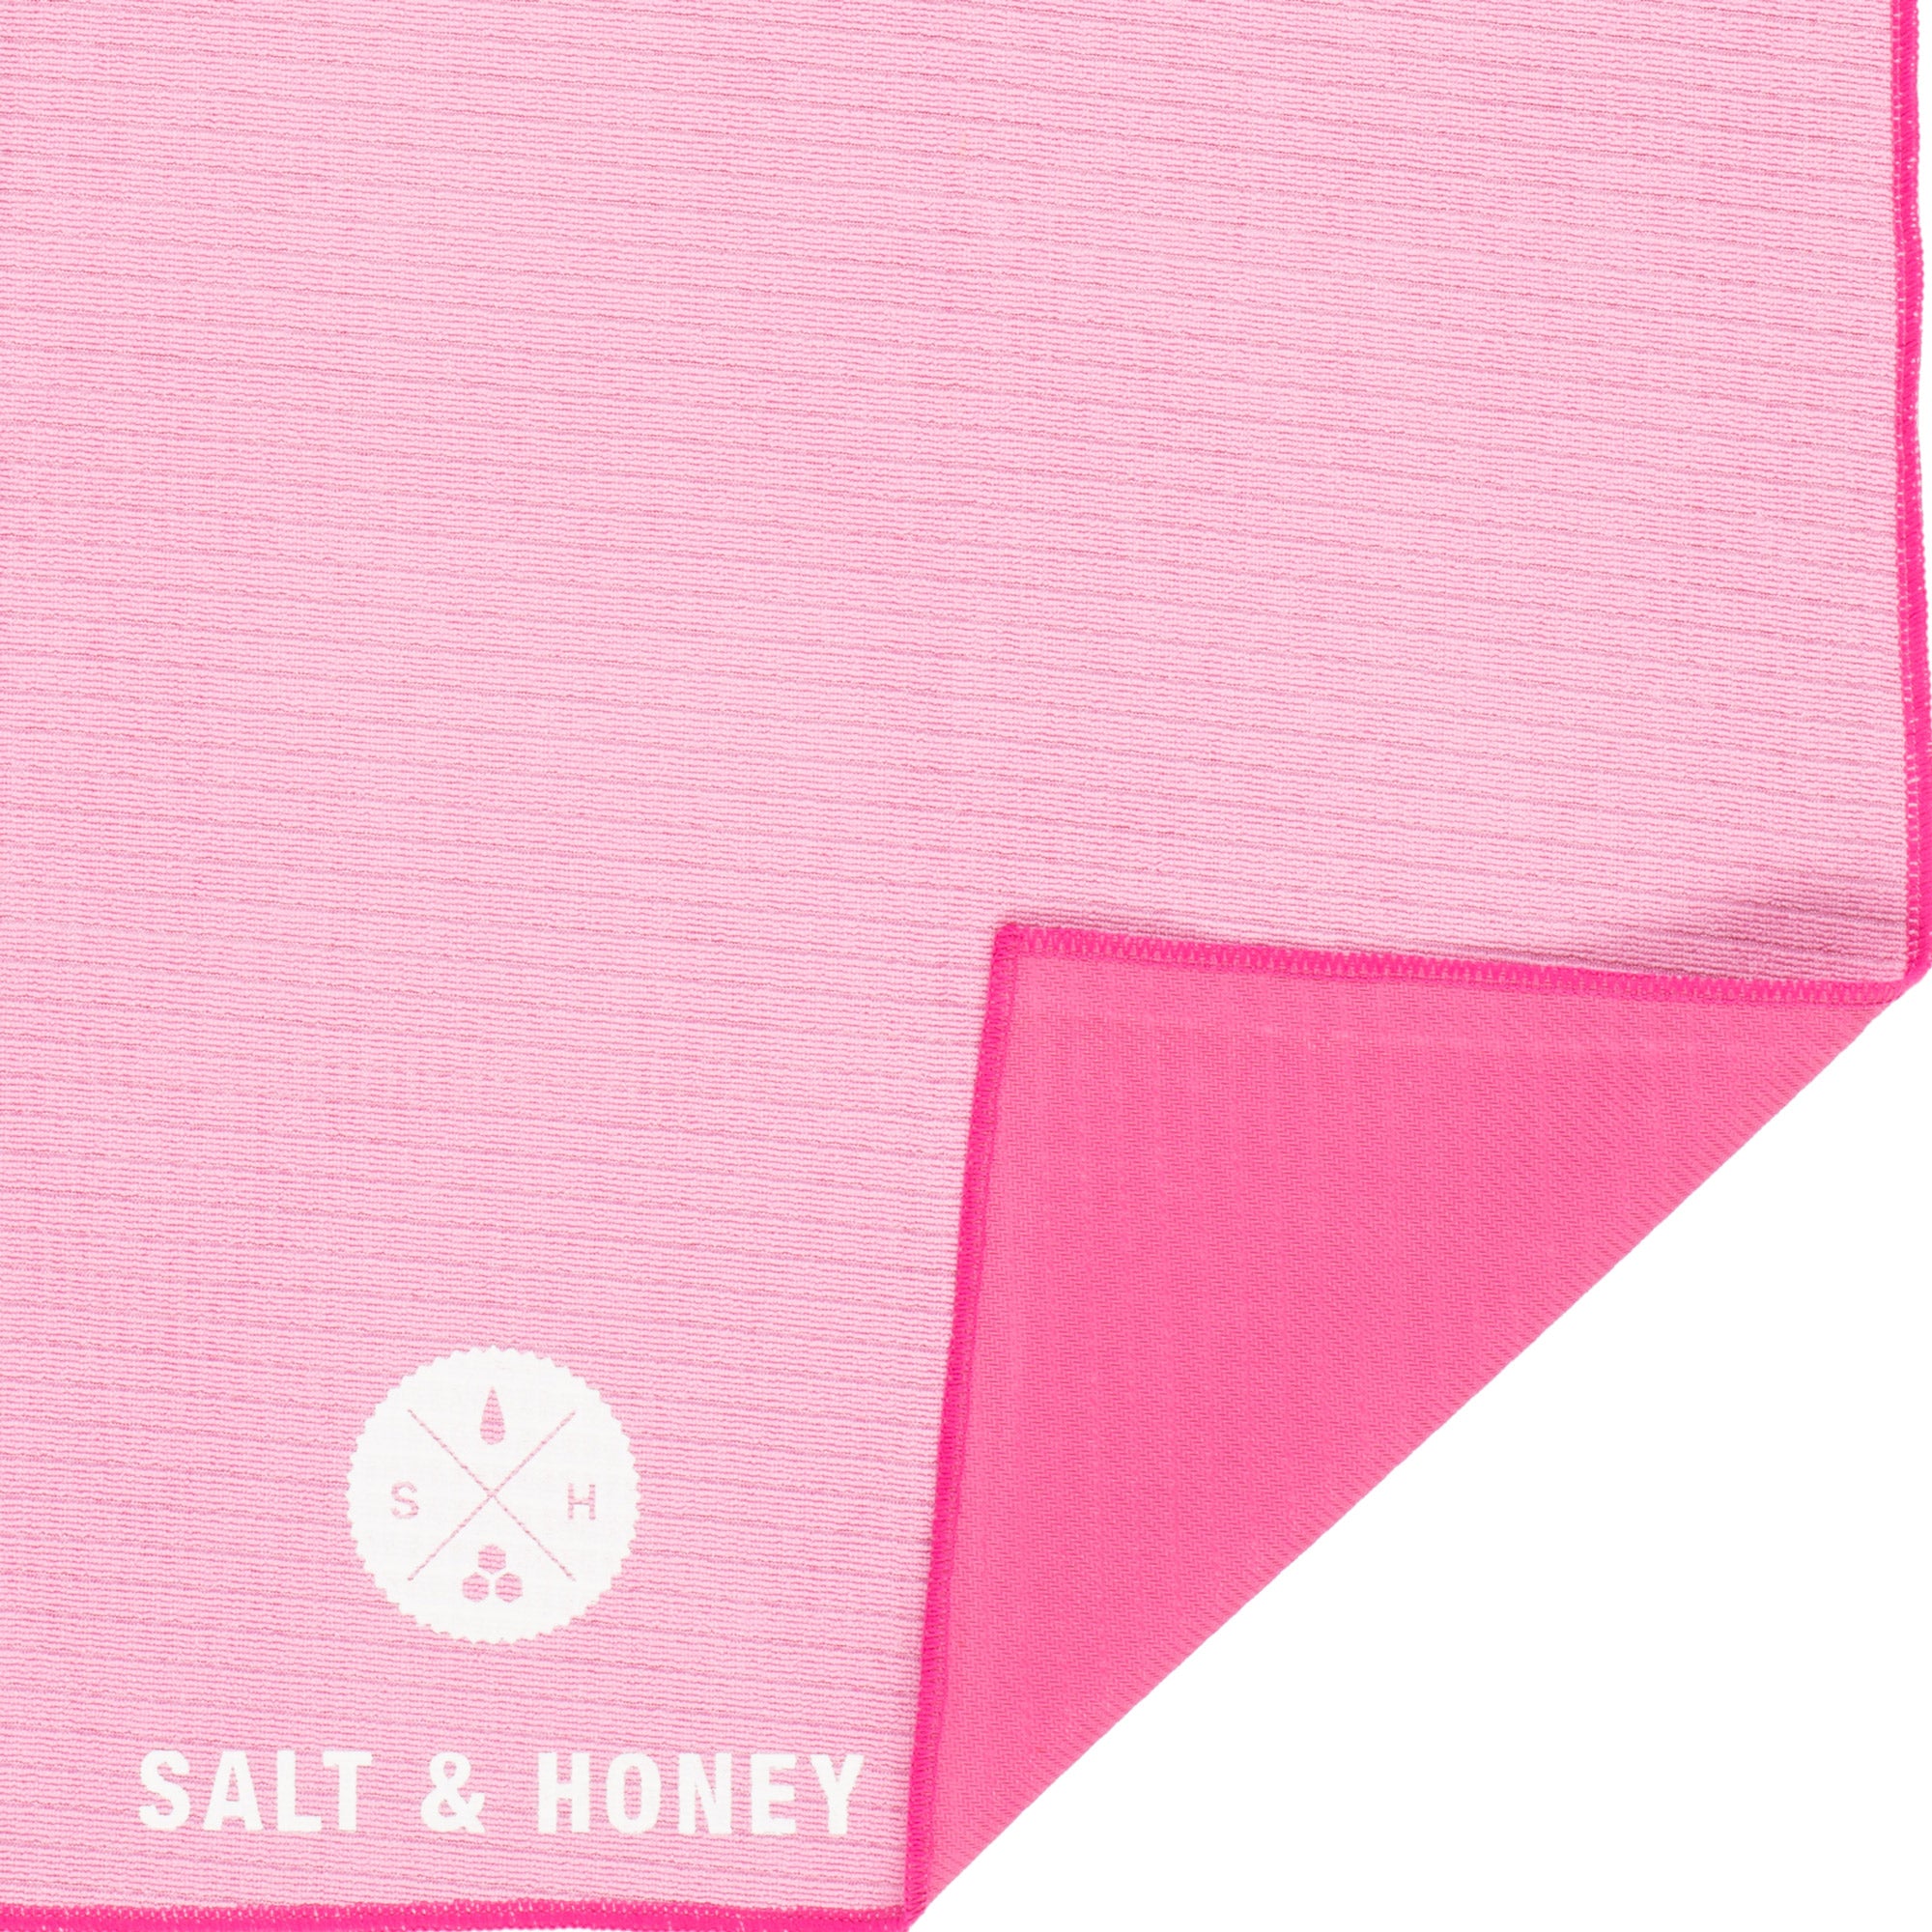 NEW Salt & Honey Non-Slip Pilates Reformer Towel and Workout Mat - Blue